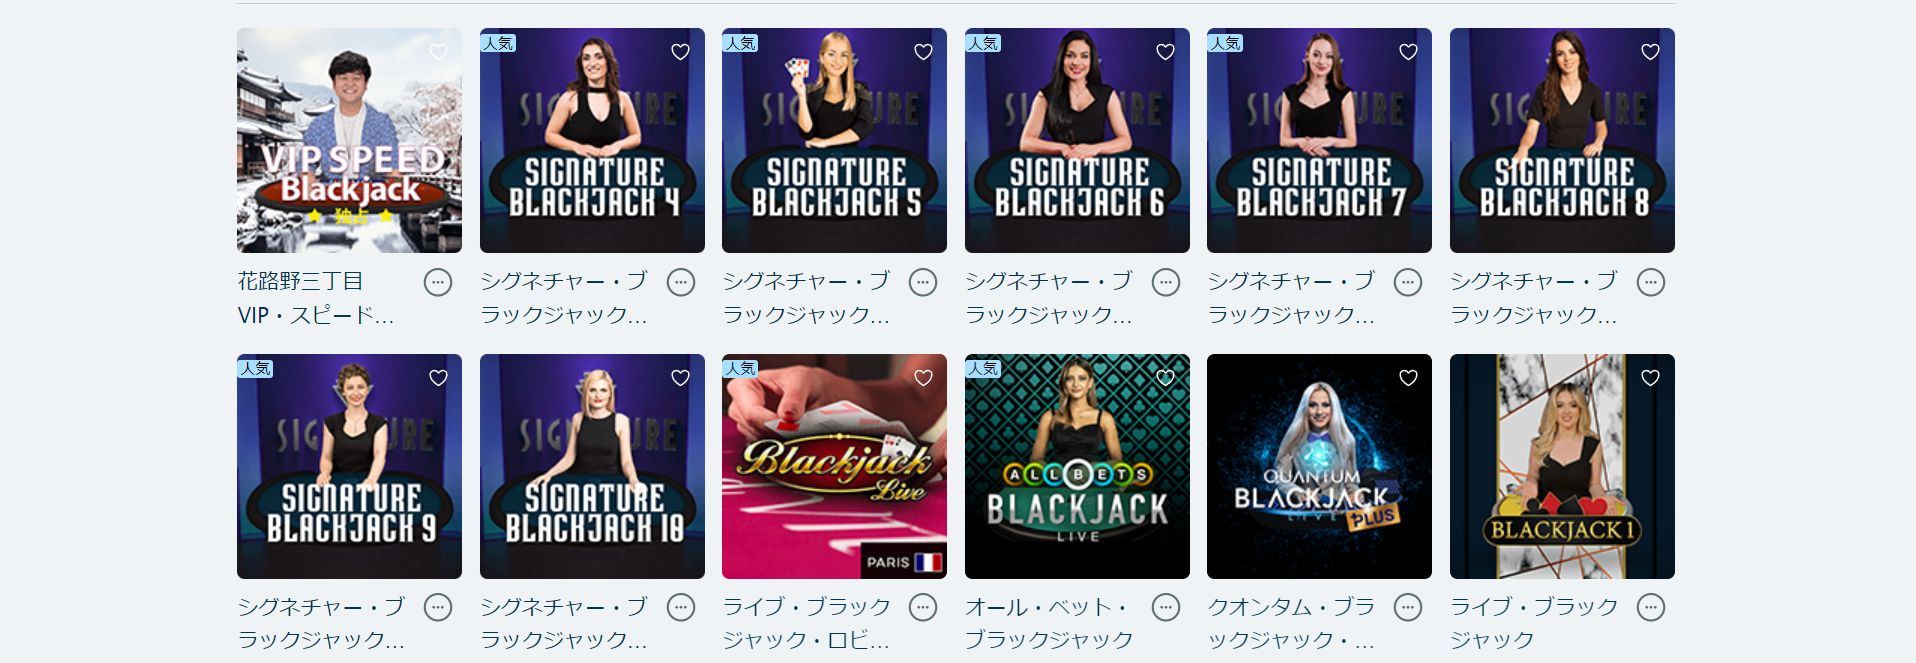 blackjack-dashboard